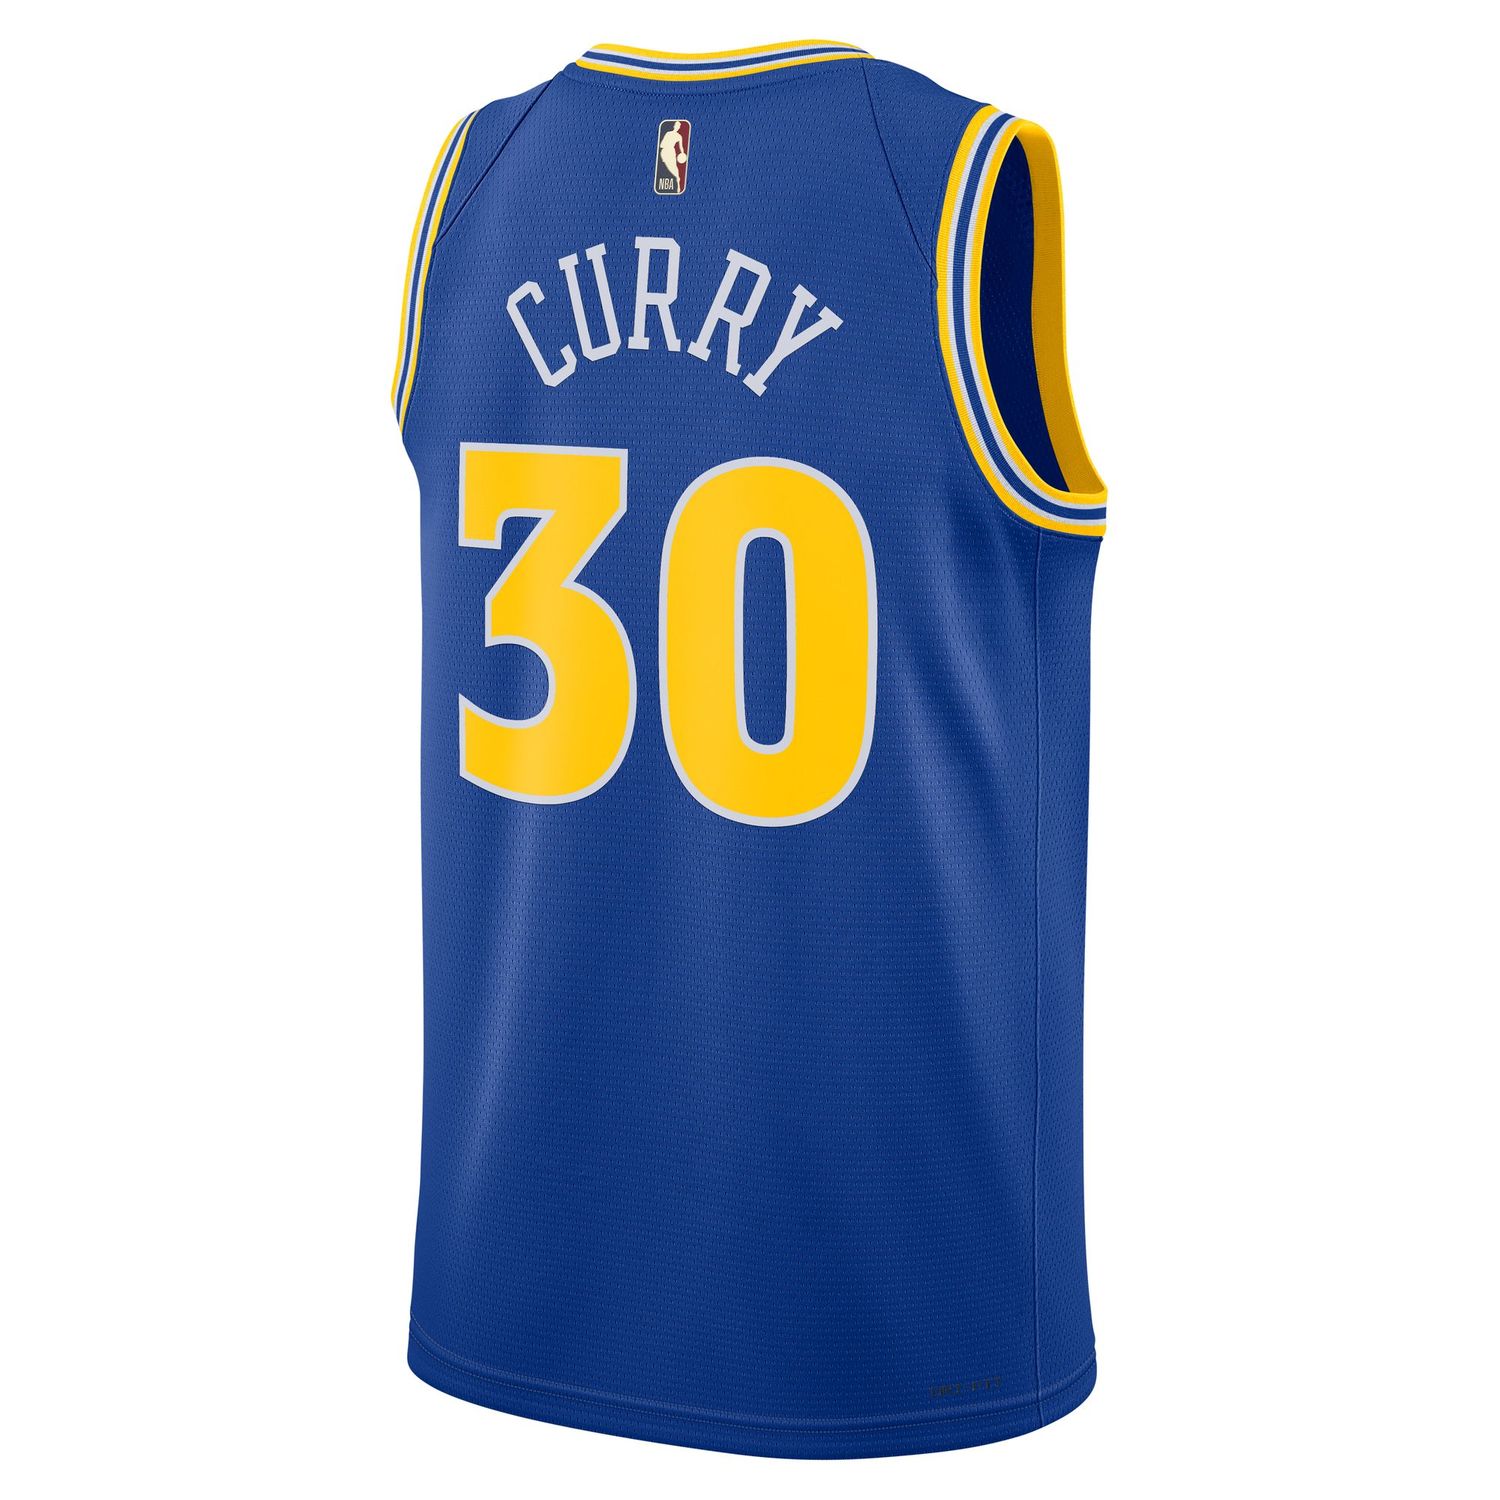 Nike NBA Stephen Curry Classic Edition Swingman Jersey